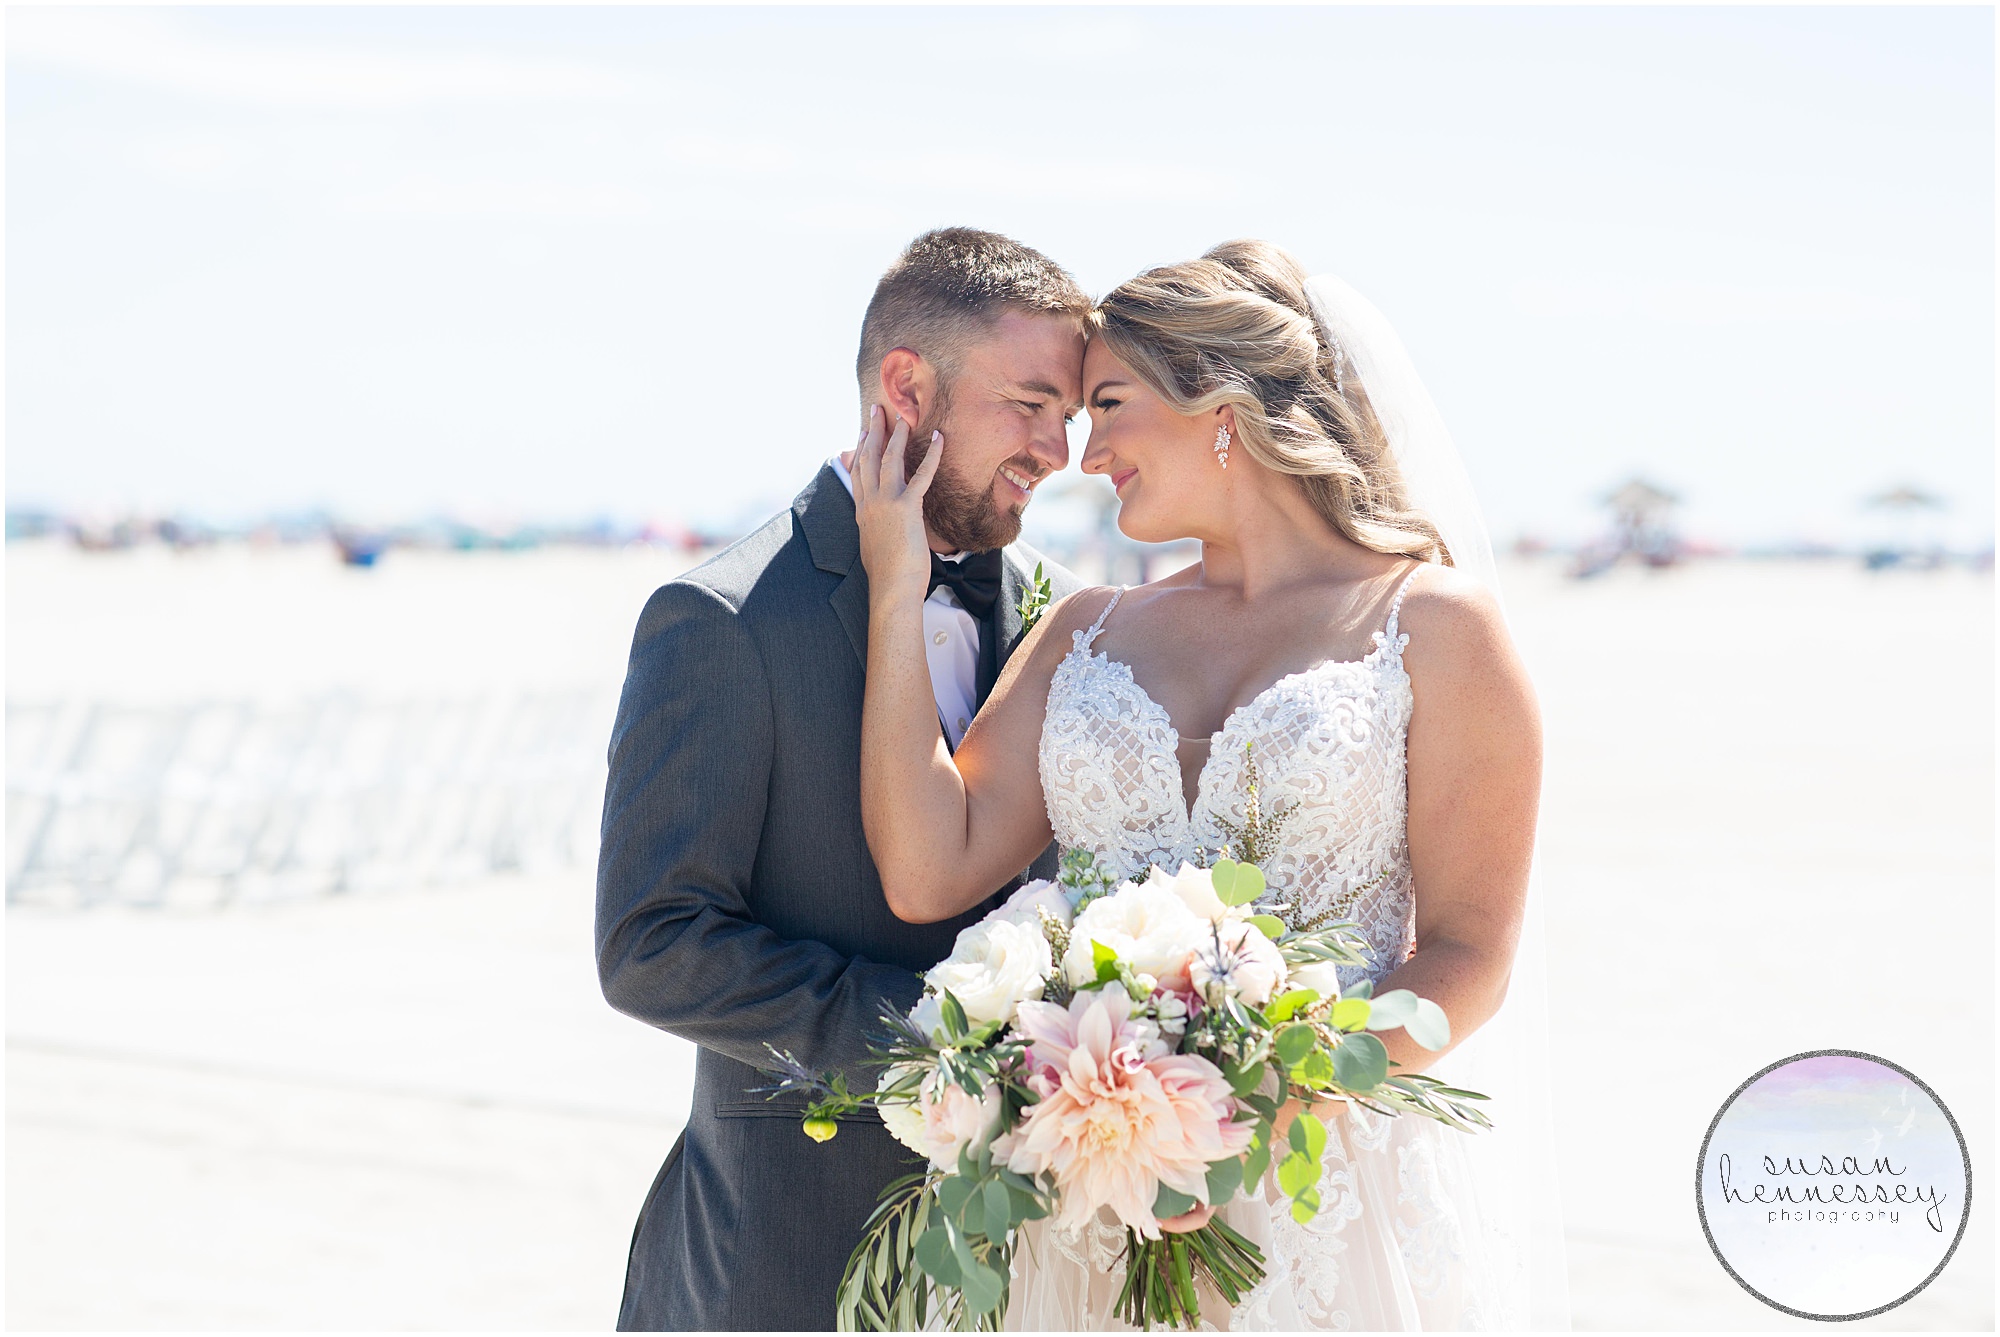 A couple at their ICONA Diamond Beach wedding in wildwood crest, NJ